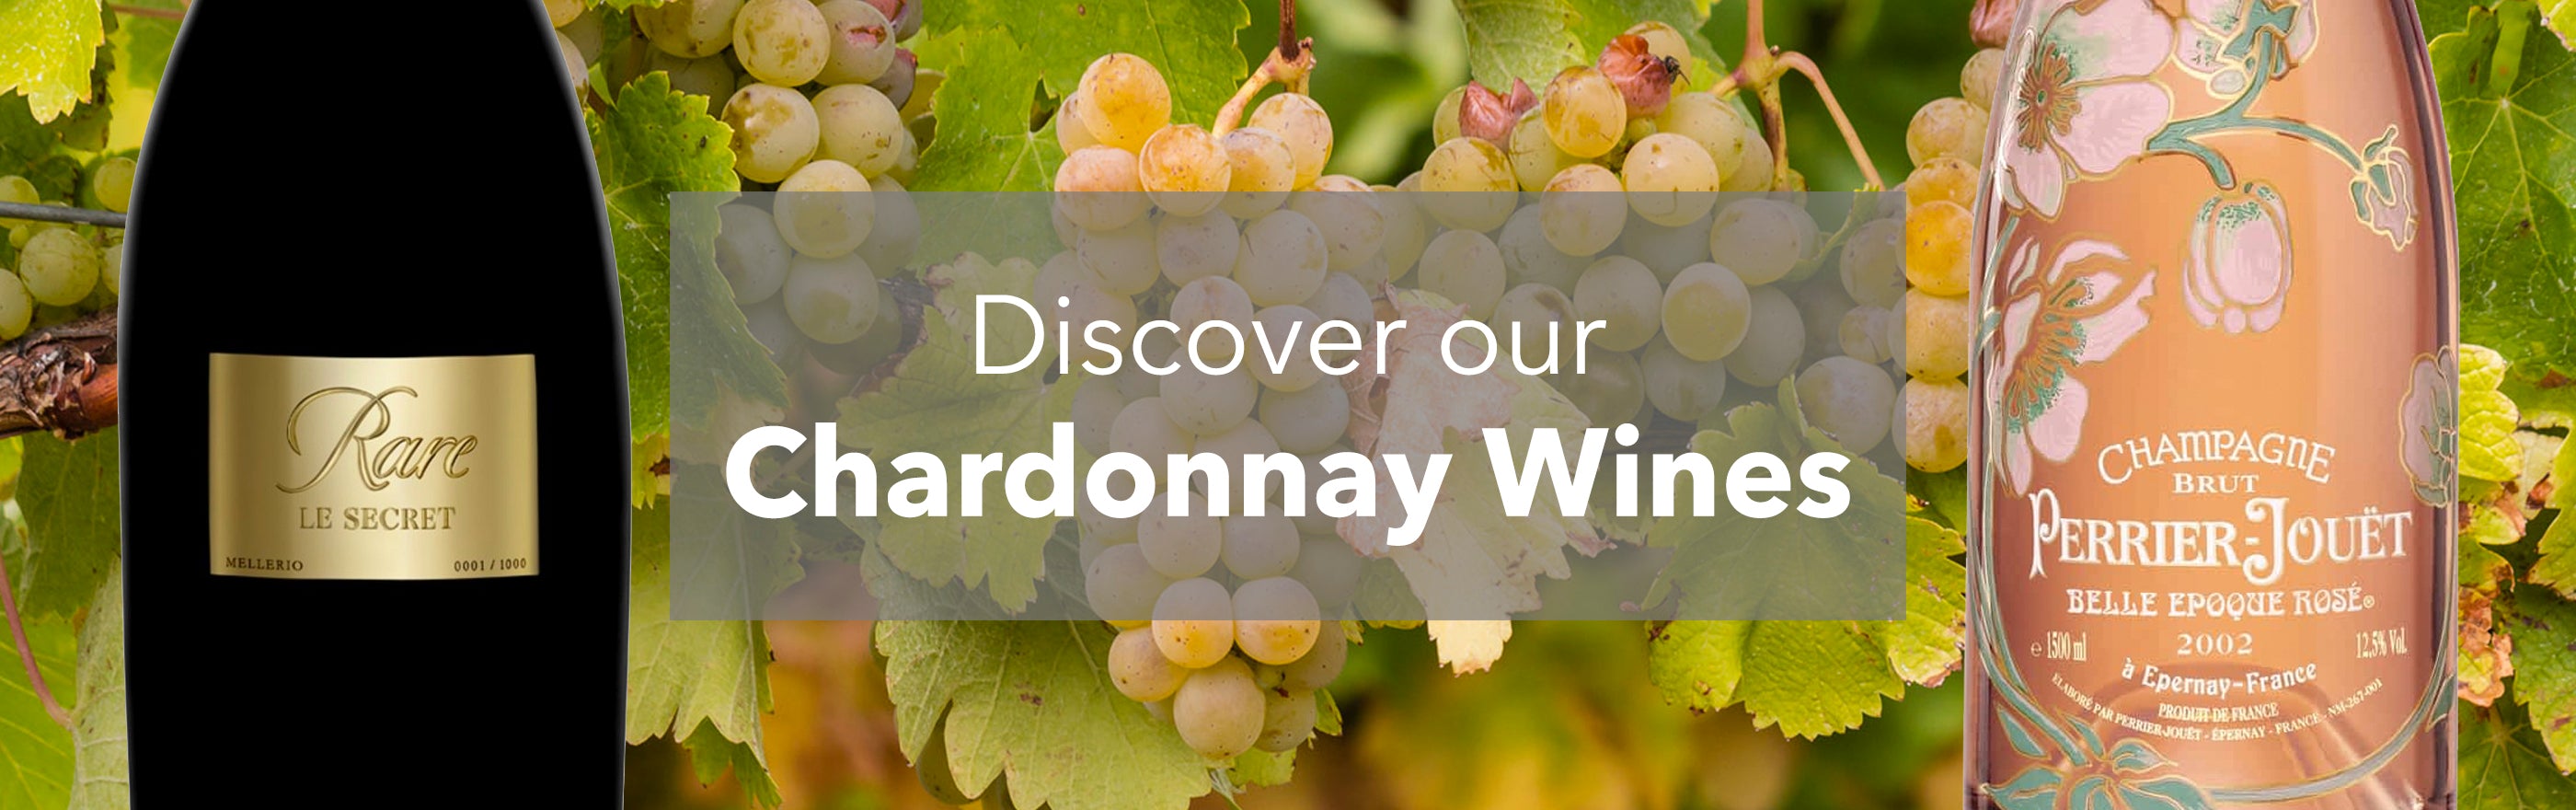 buy chardonnay wines online shop